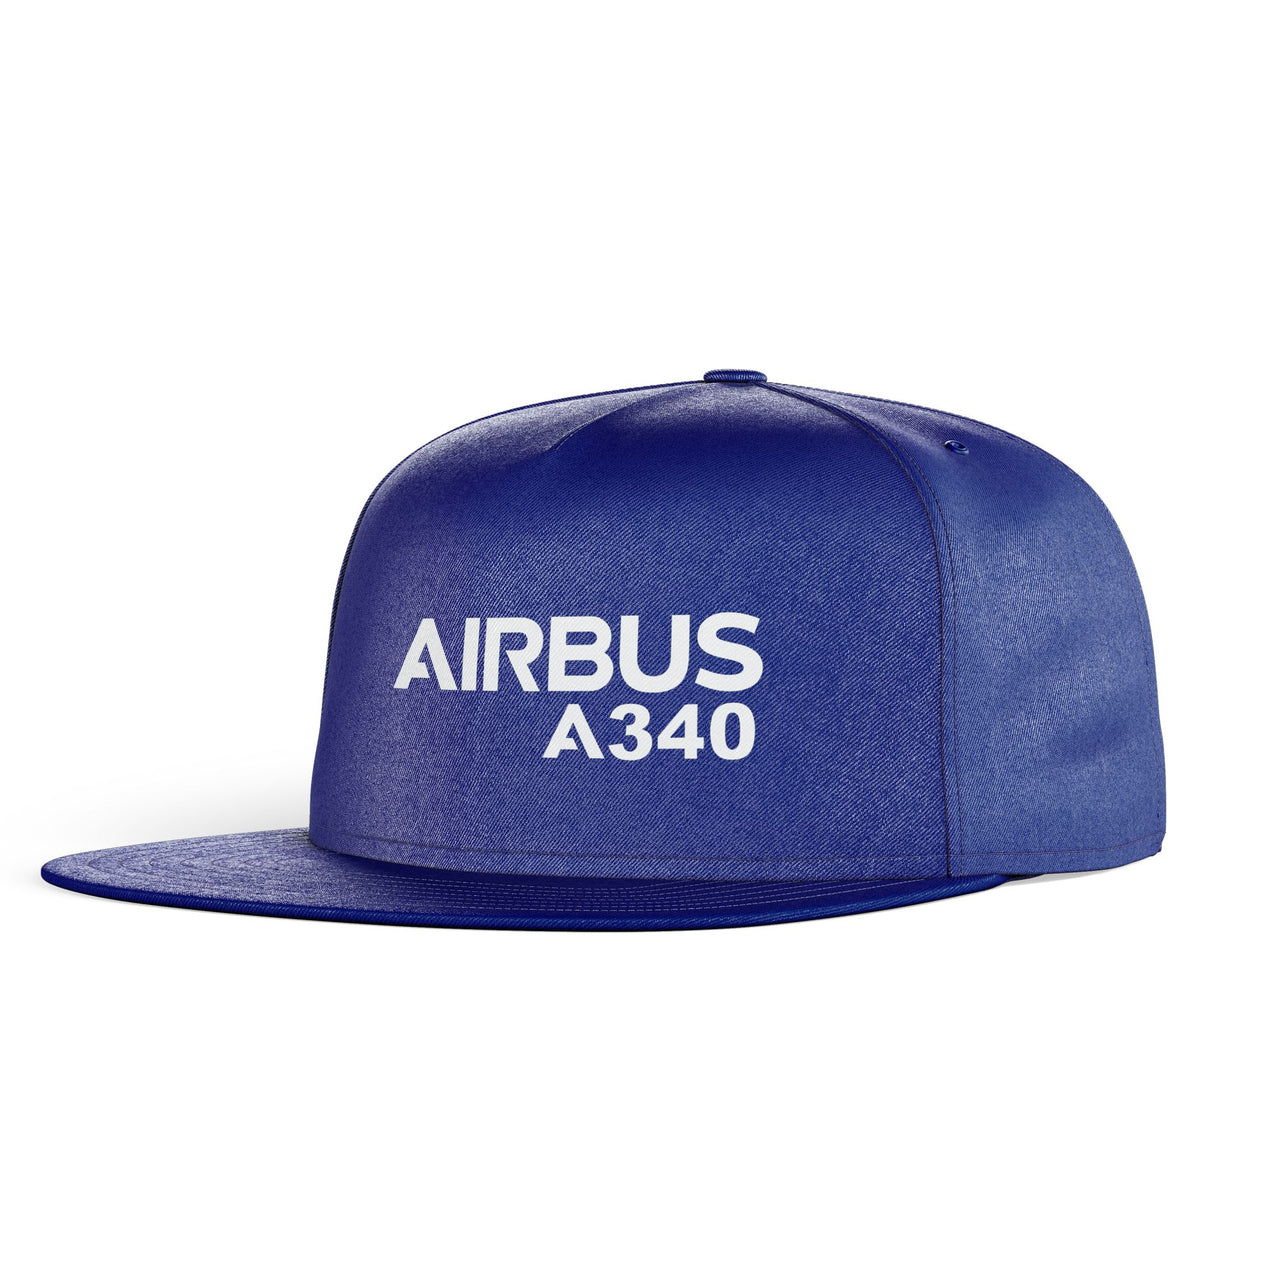 Airbus A340 & Text Designed Snapback Caps & Hats